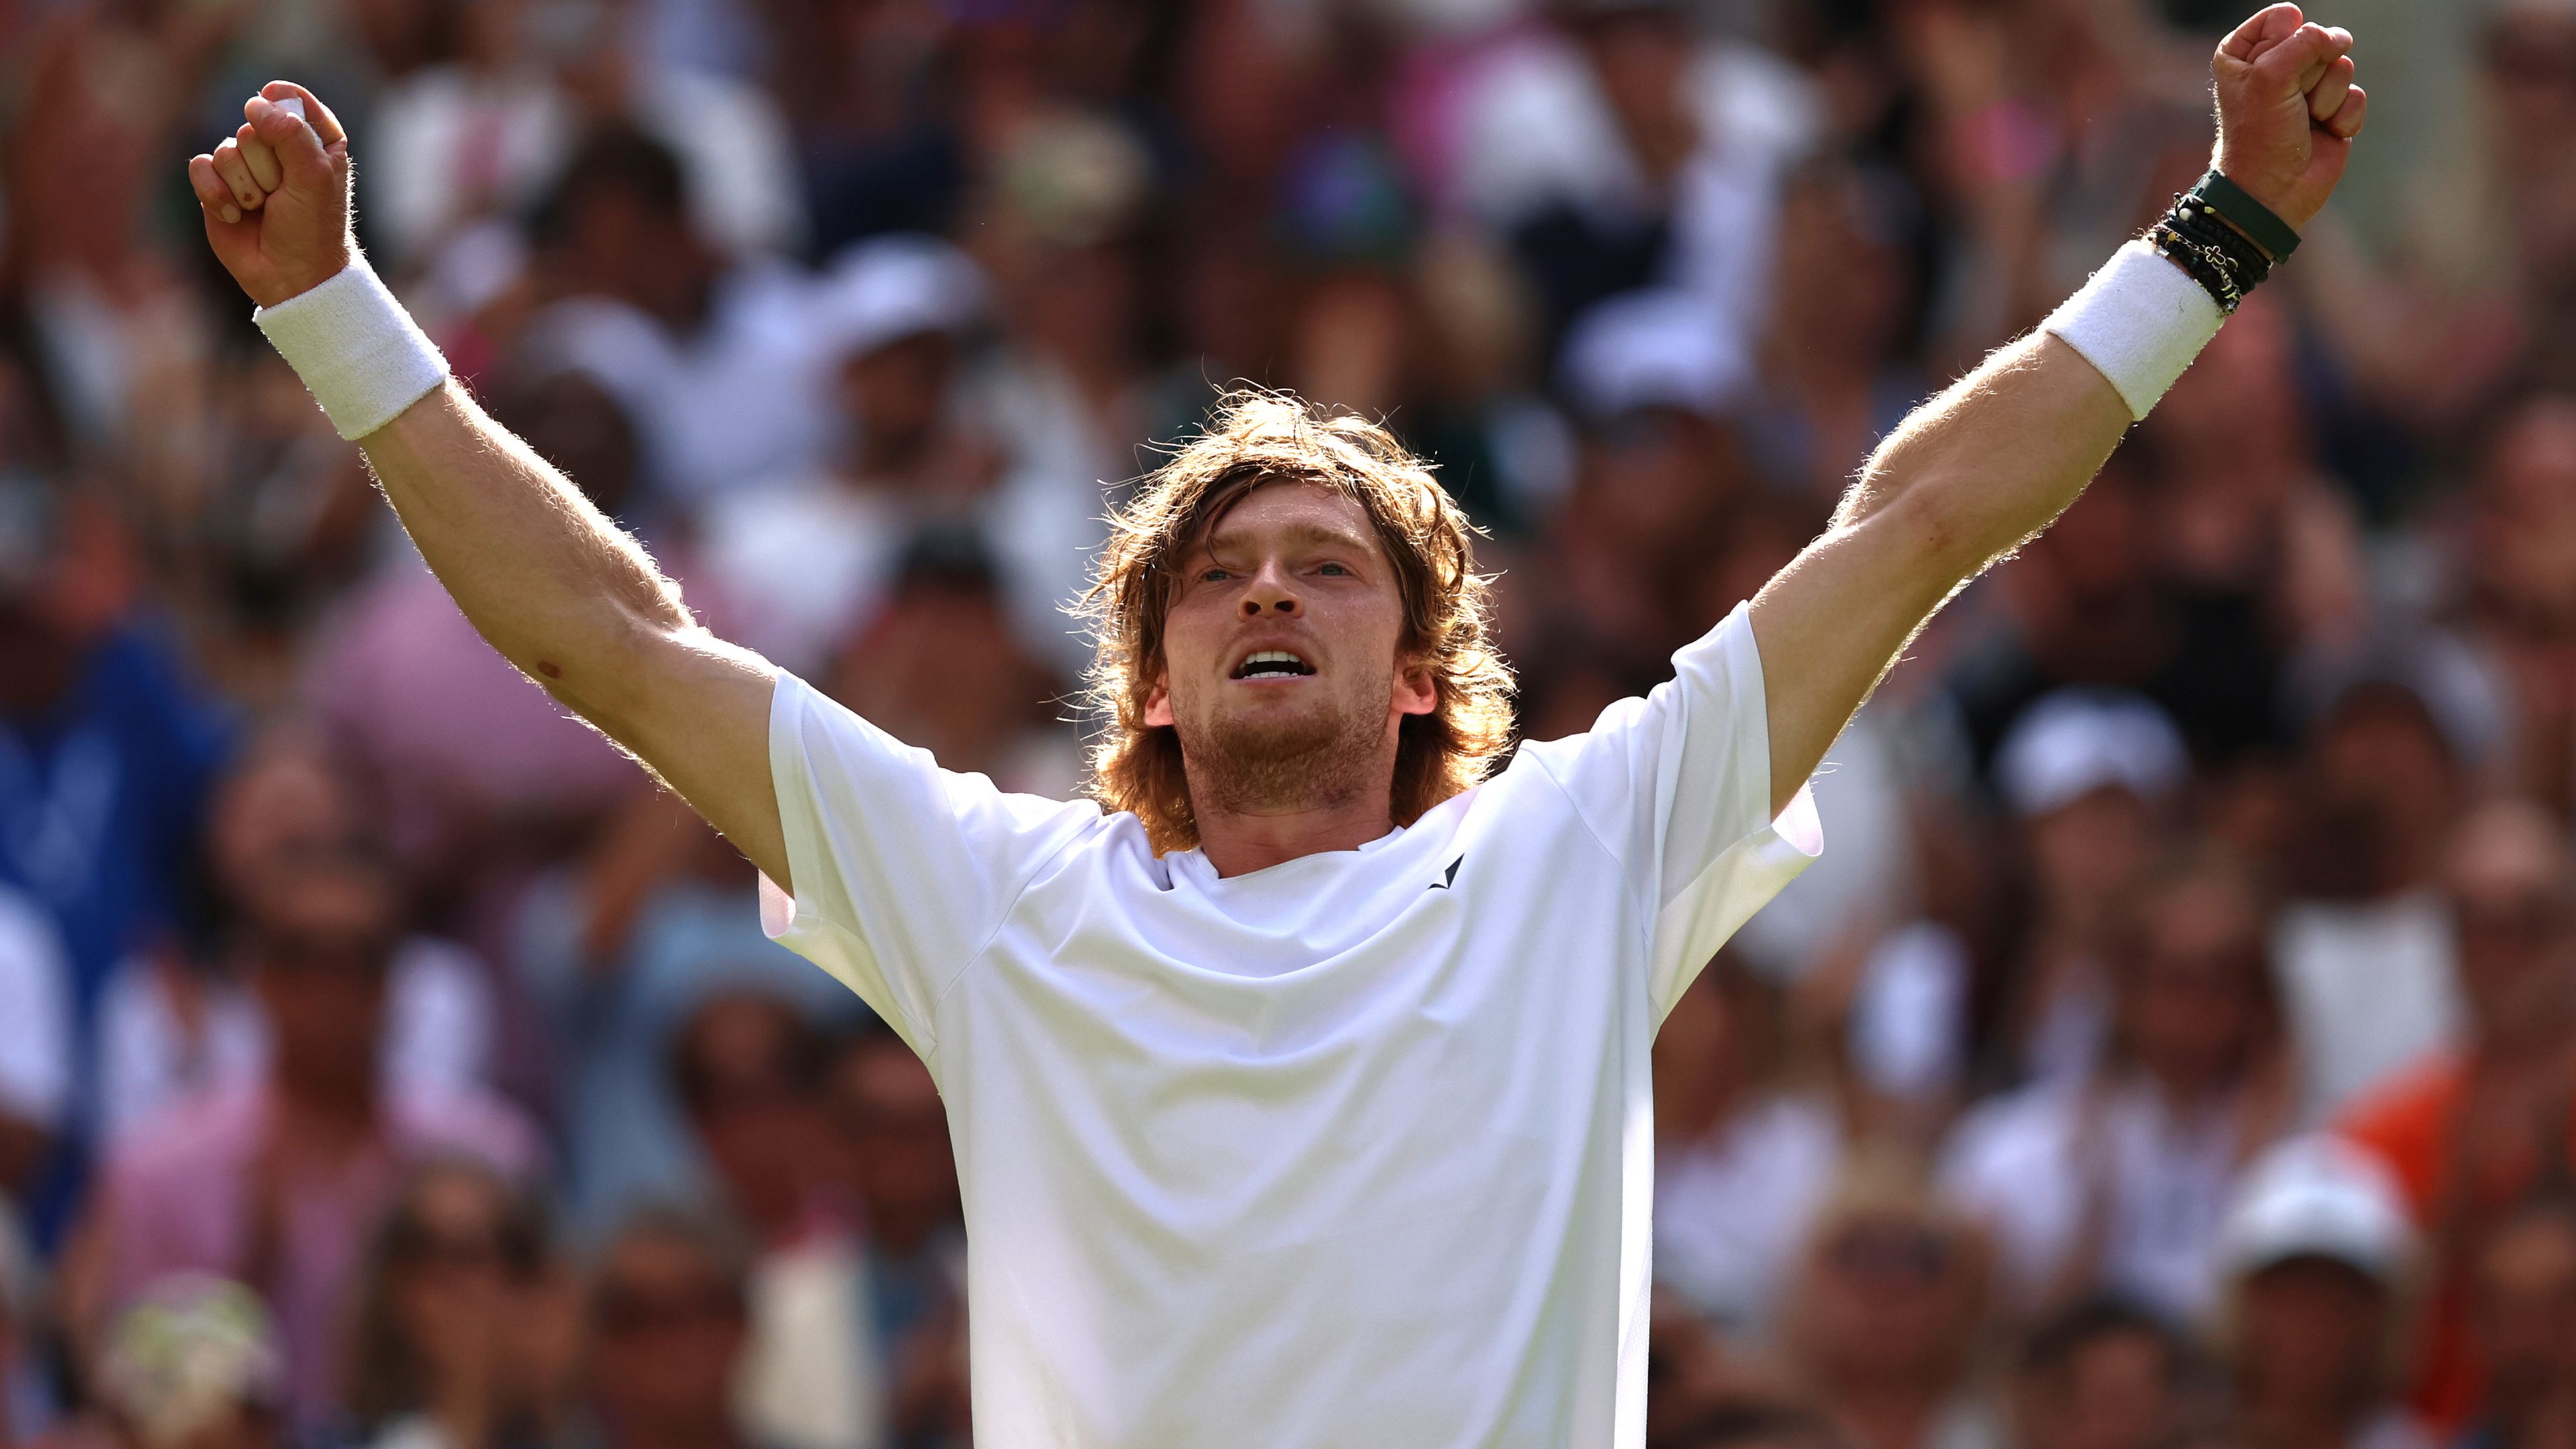 Andrey Rublev stuns tennis world with 'luckiest shot ever' to make Wimbledon quarter-finals